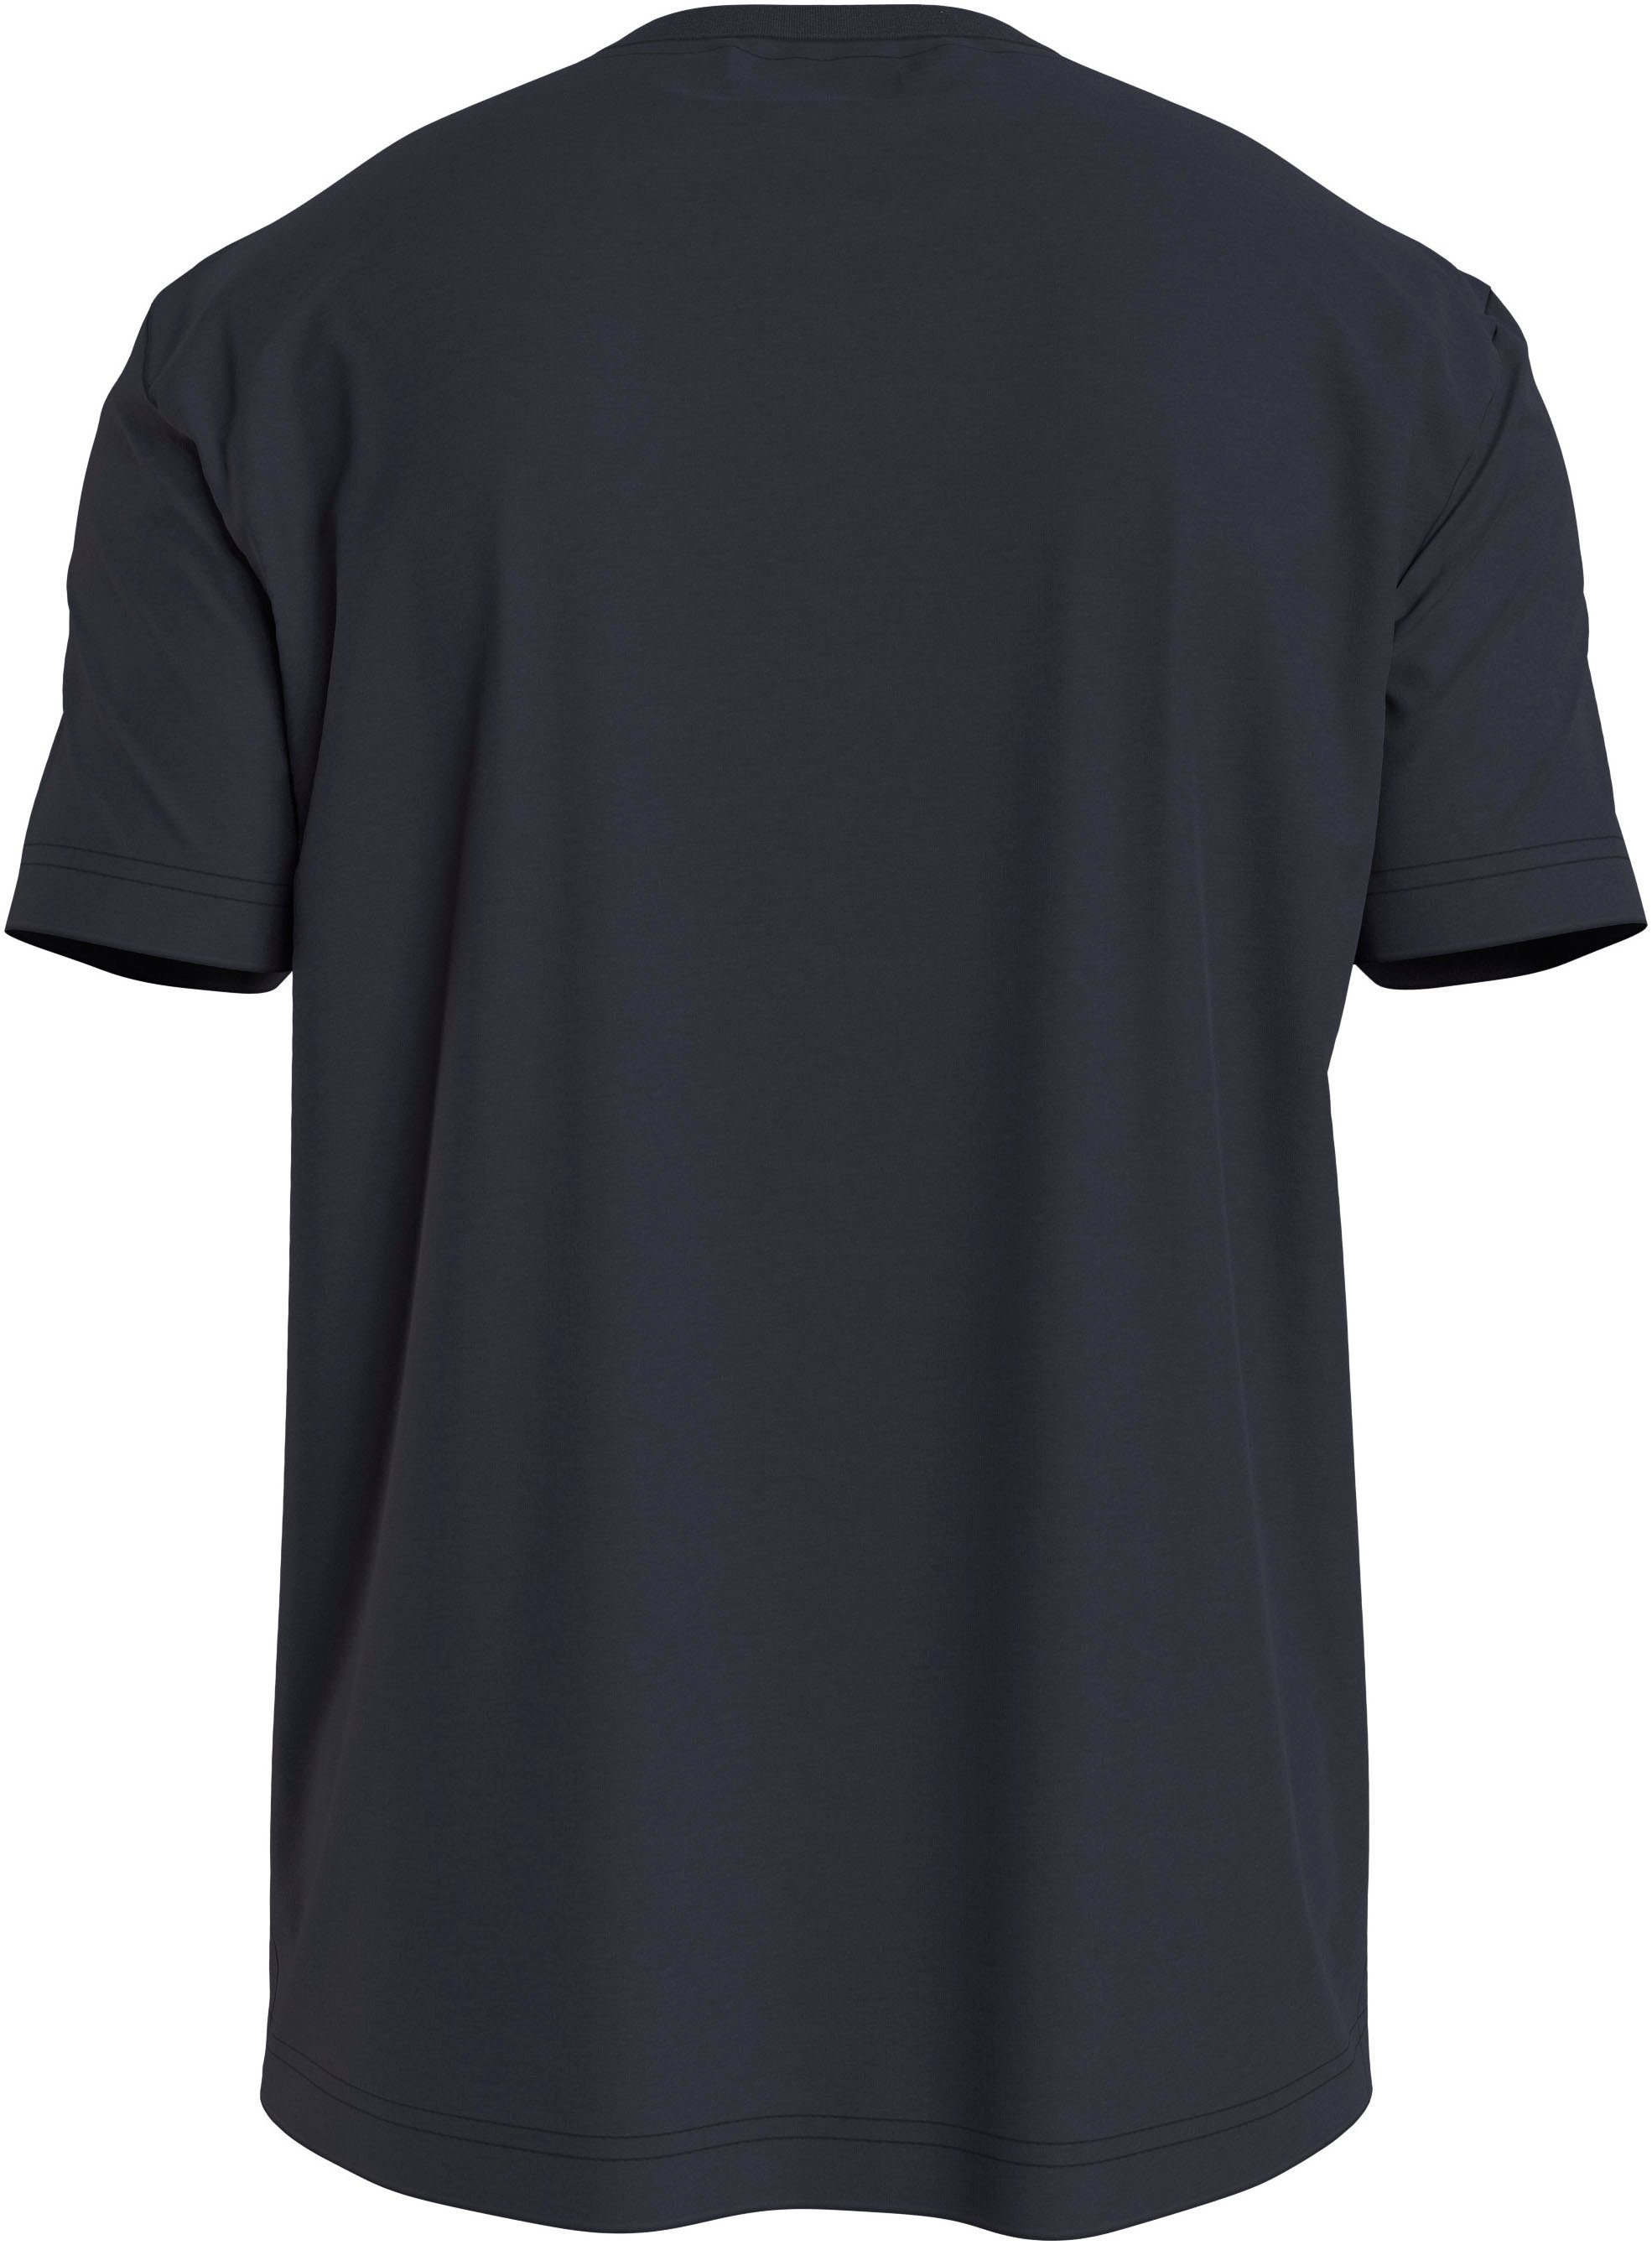 Sky MULTI T-Shirt T-SHIRT Night Markenlabel COLOR LOGO Klein mit Calvin